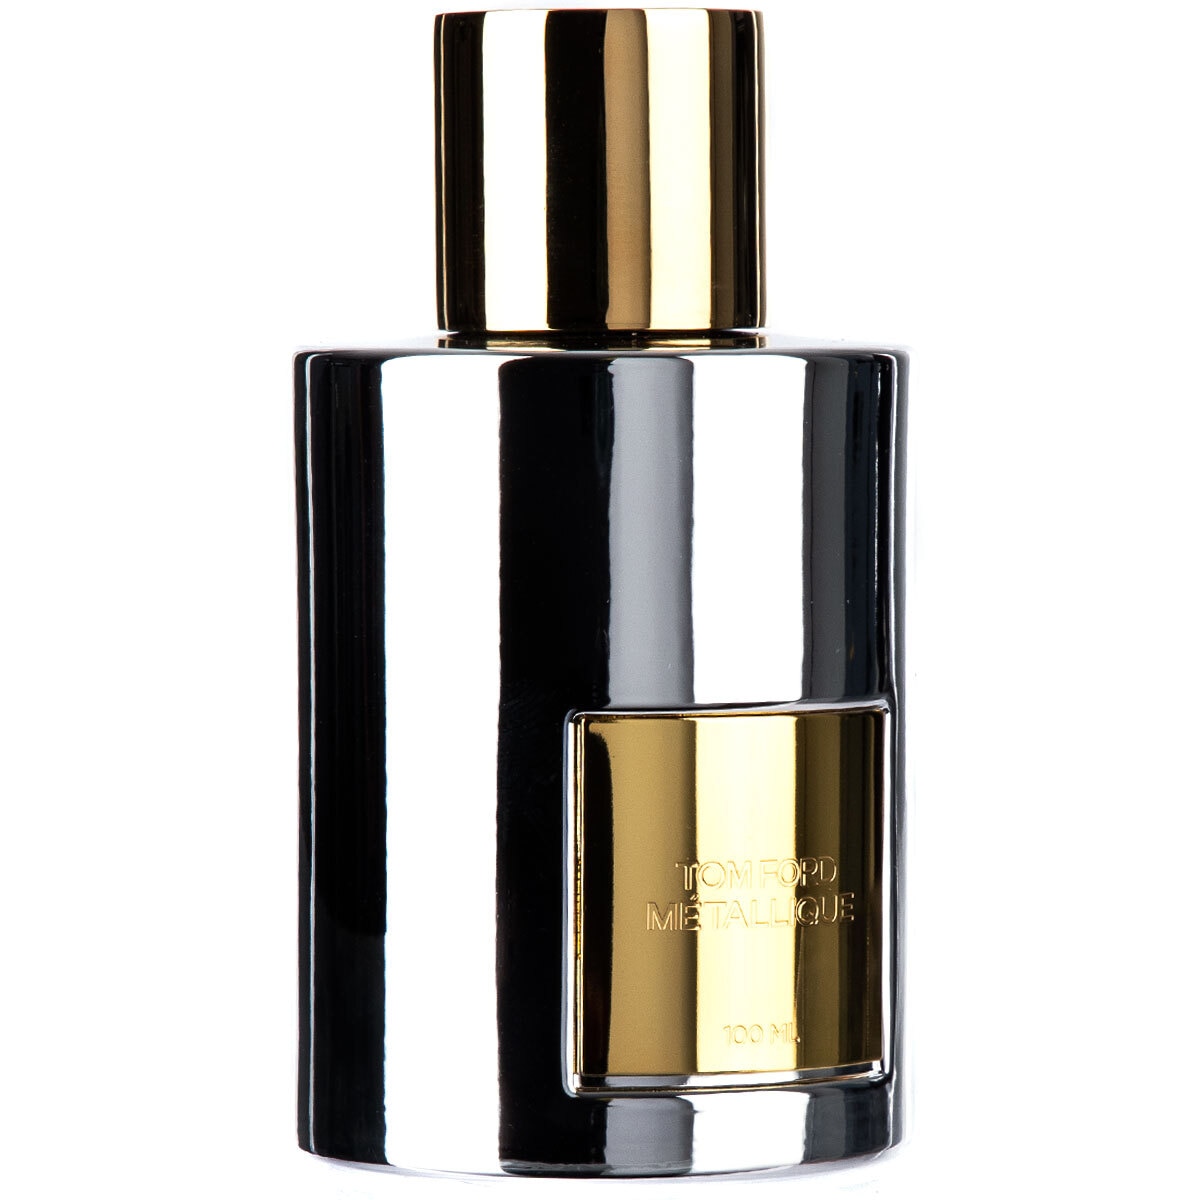 Tom Ford Metallique Eau De Parfum 100ml | Costco Australia